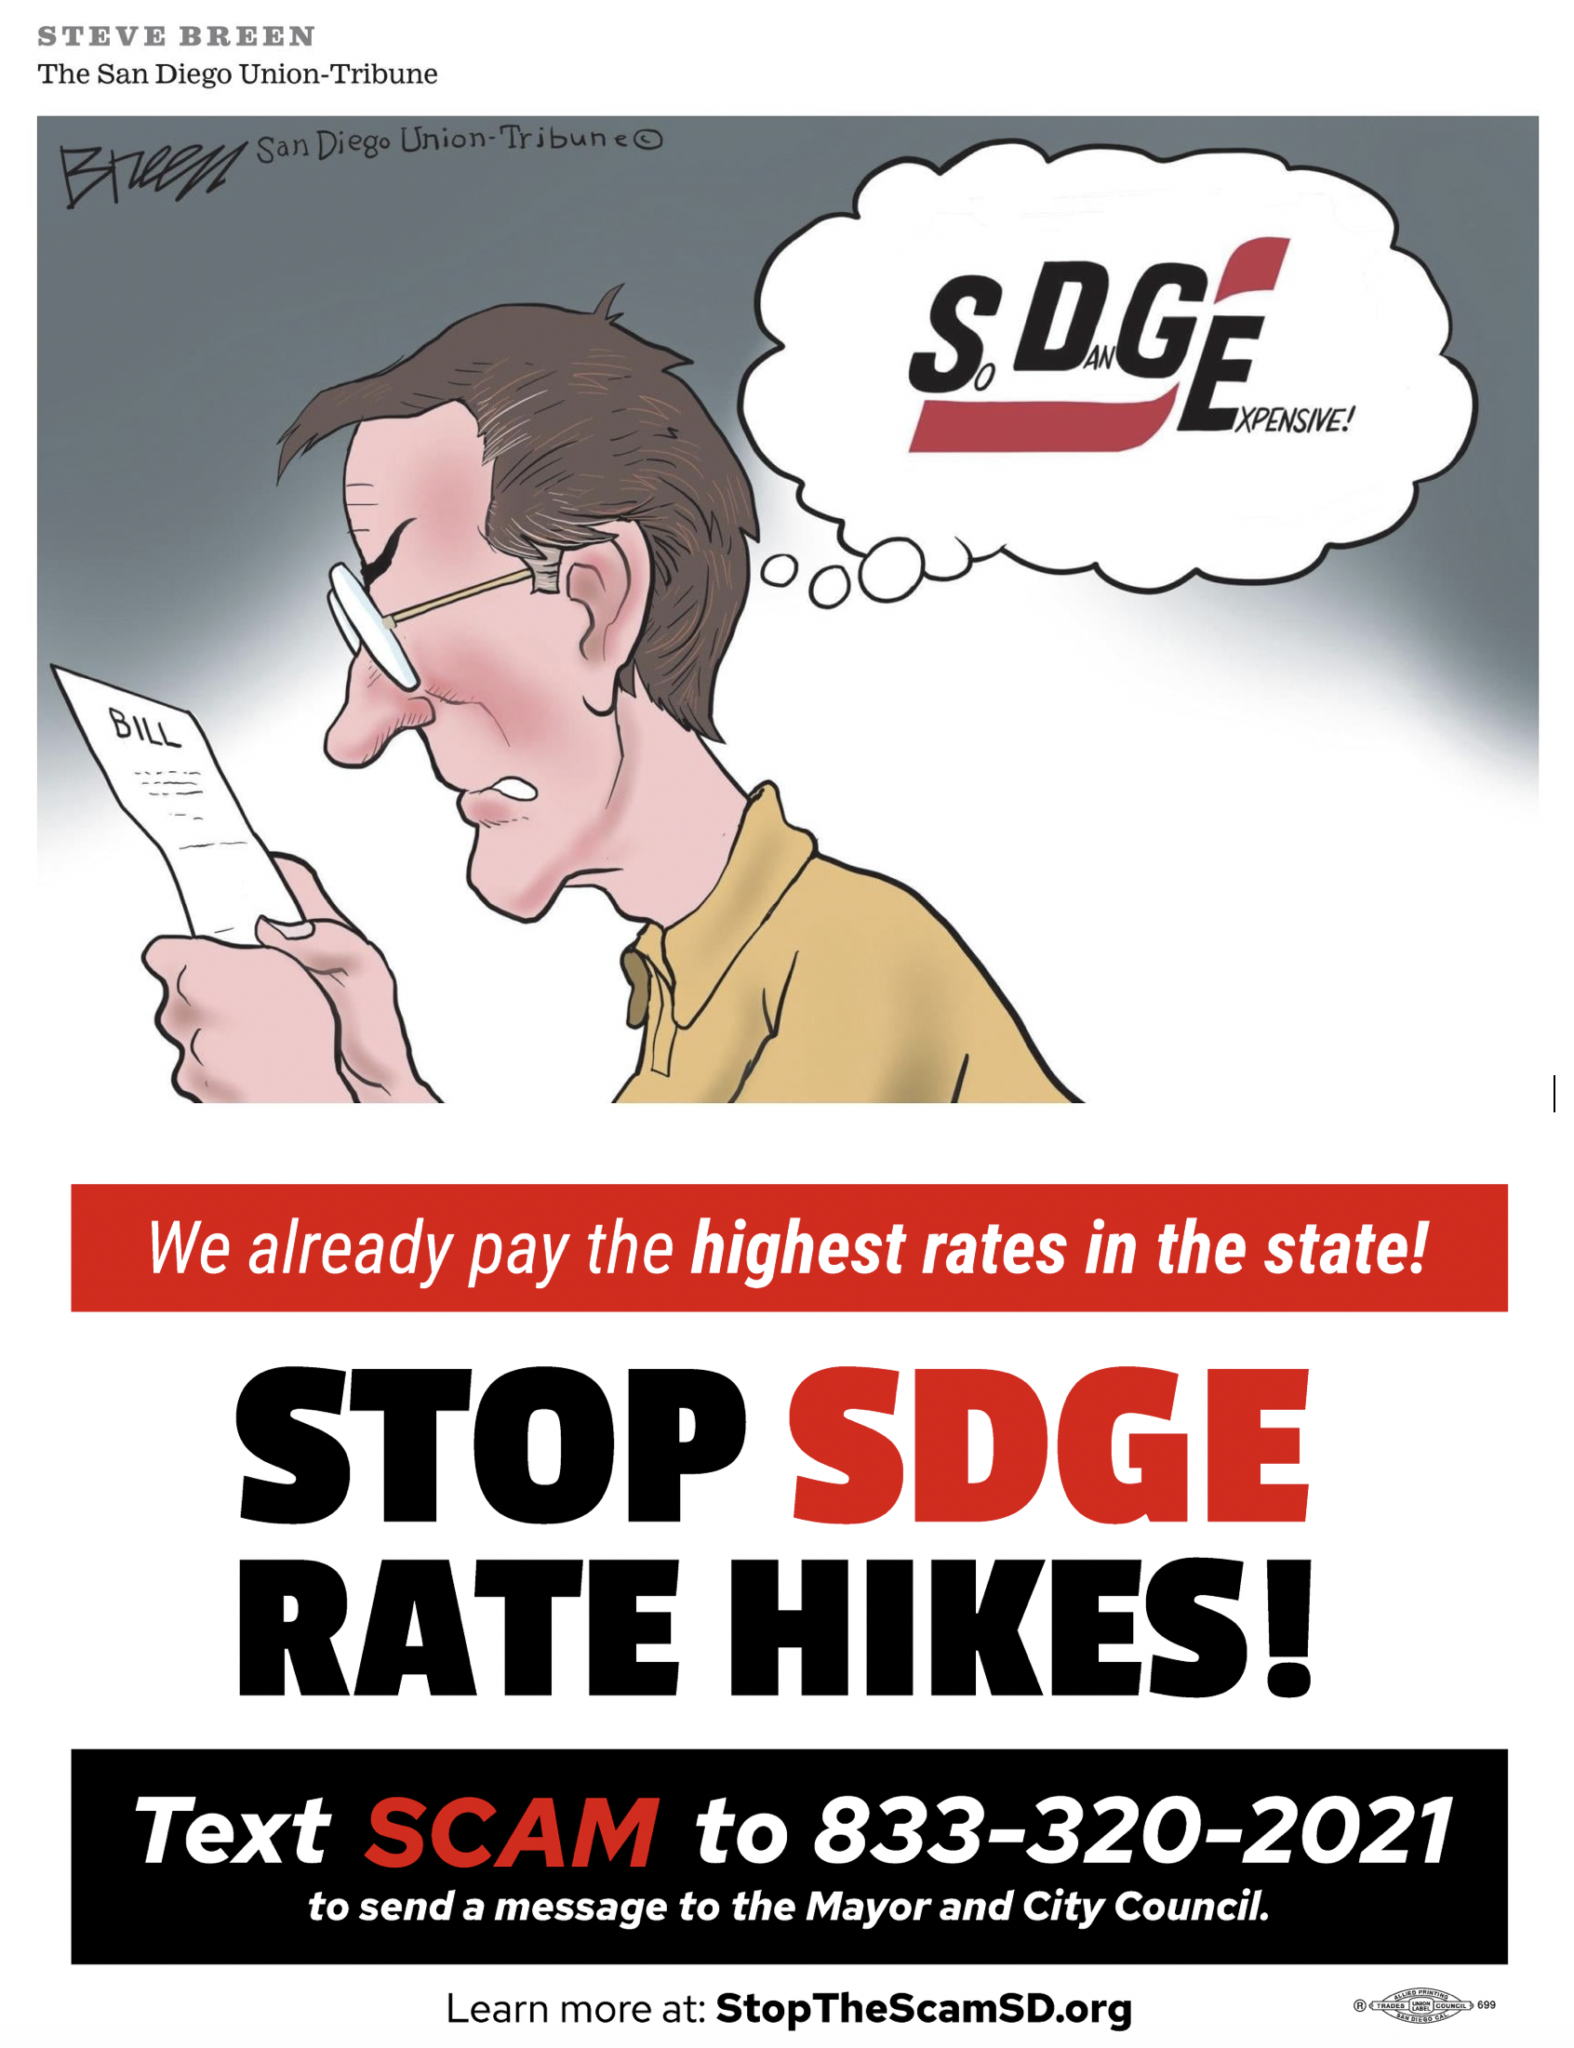 Stop SDGE Rate Hikes Steve Breen 061422